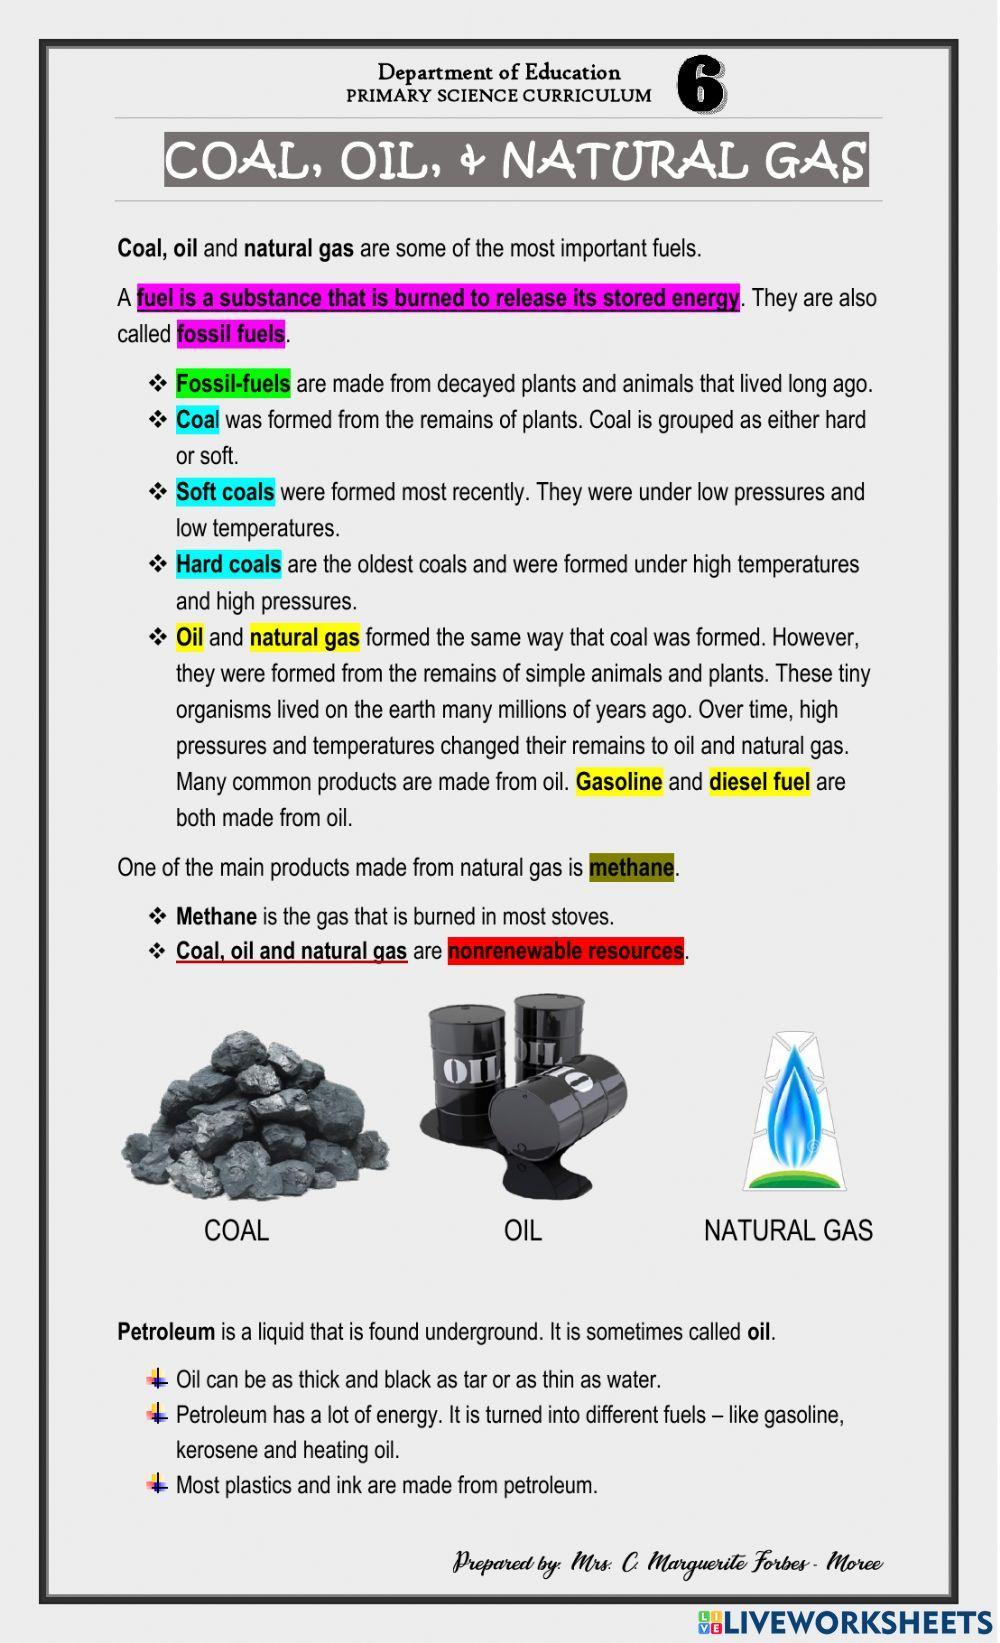 Coal, Oil, Natural Gas, and Petroleum